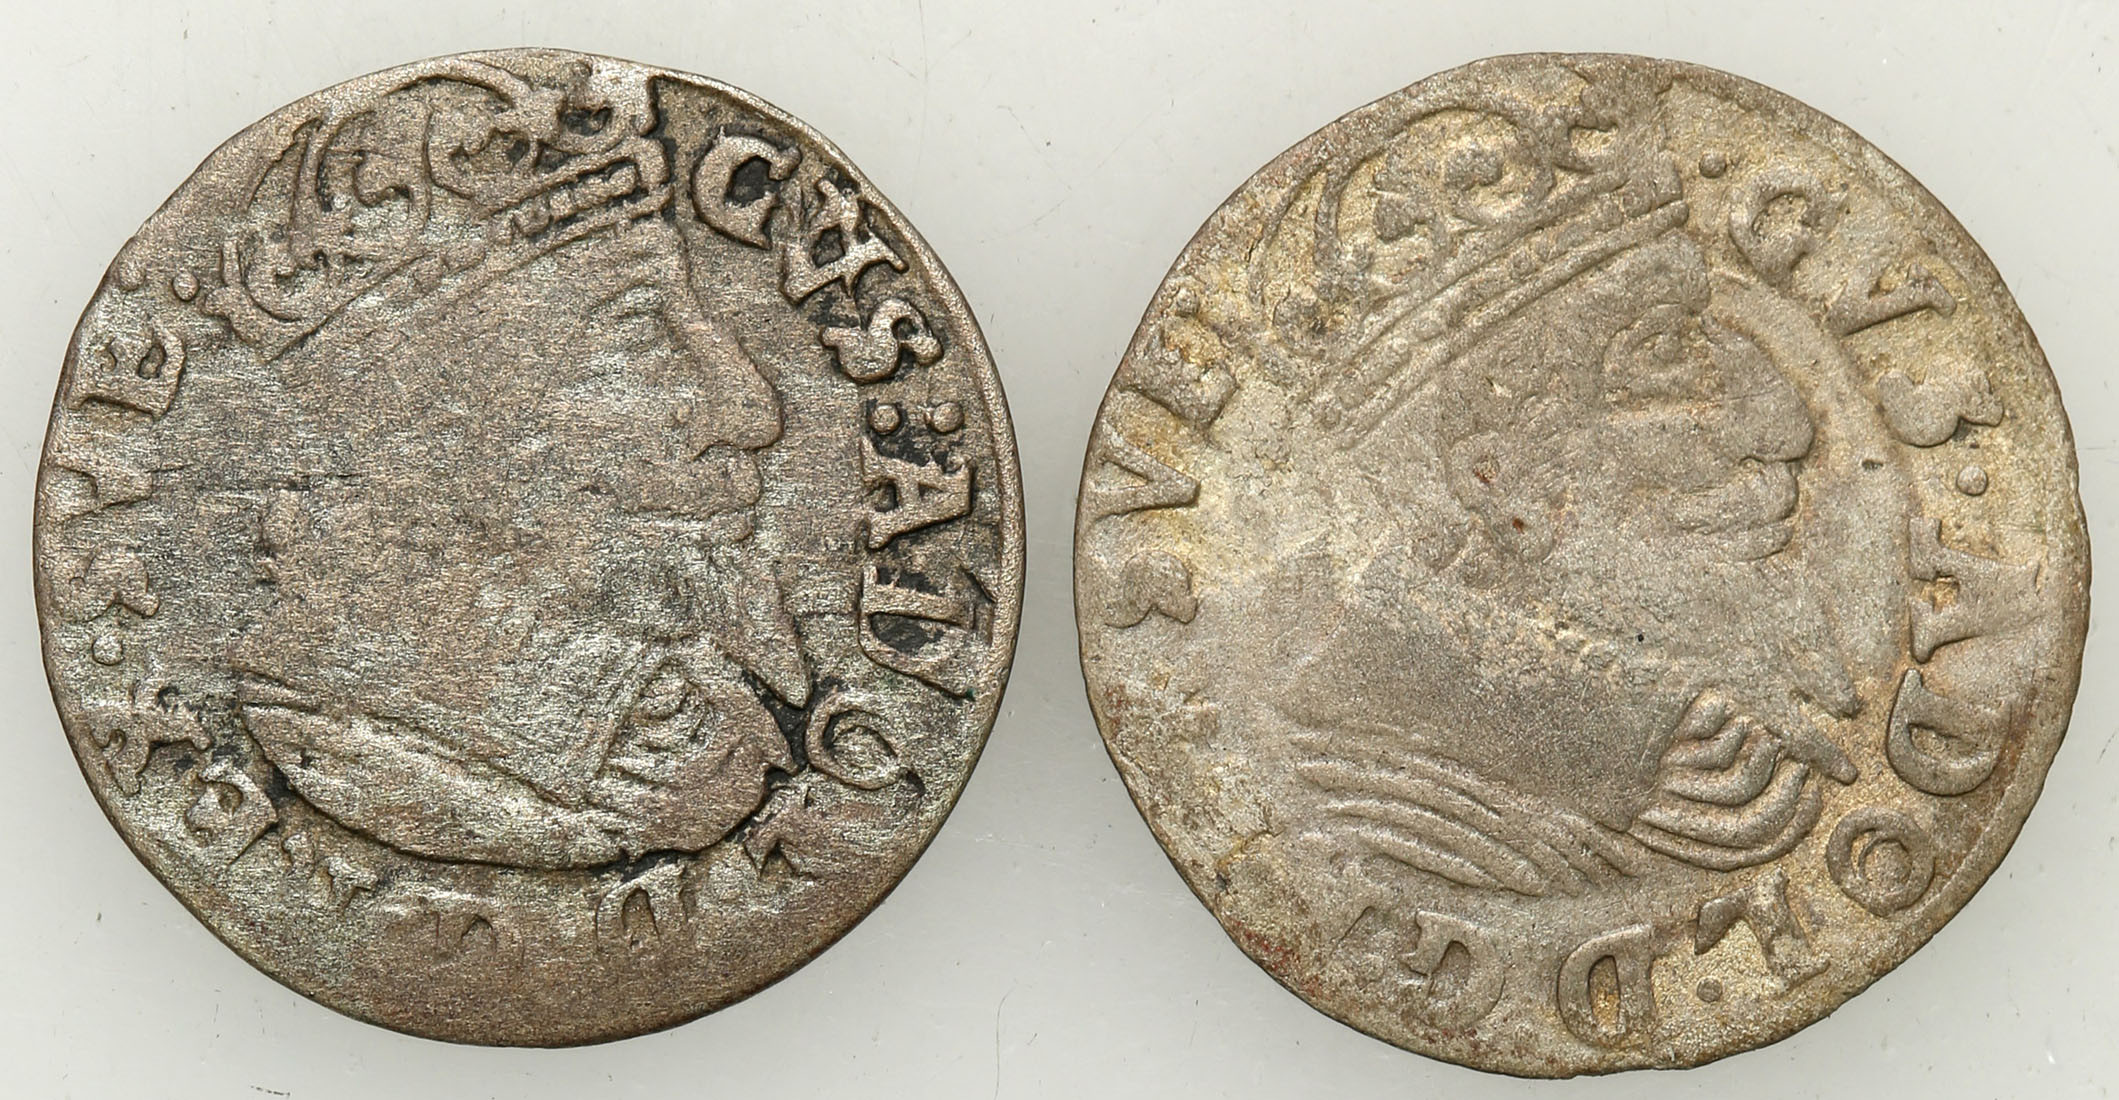 Gustaw II Adolf - okupacja szwedzka. Grosz 1629, 1630 Elbląg, zestaw 2 monet